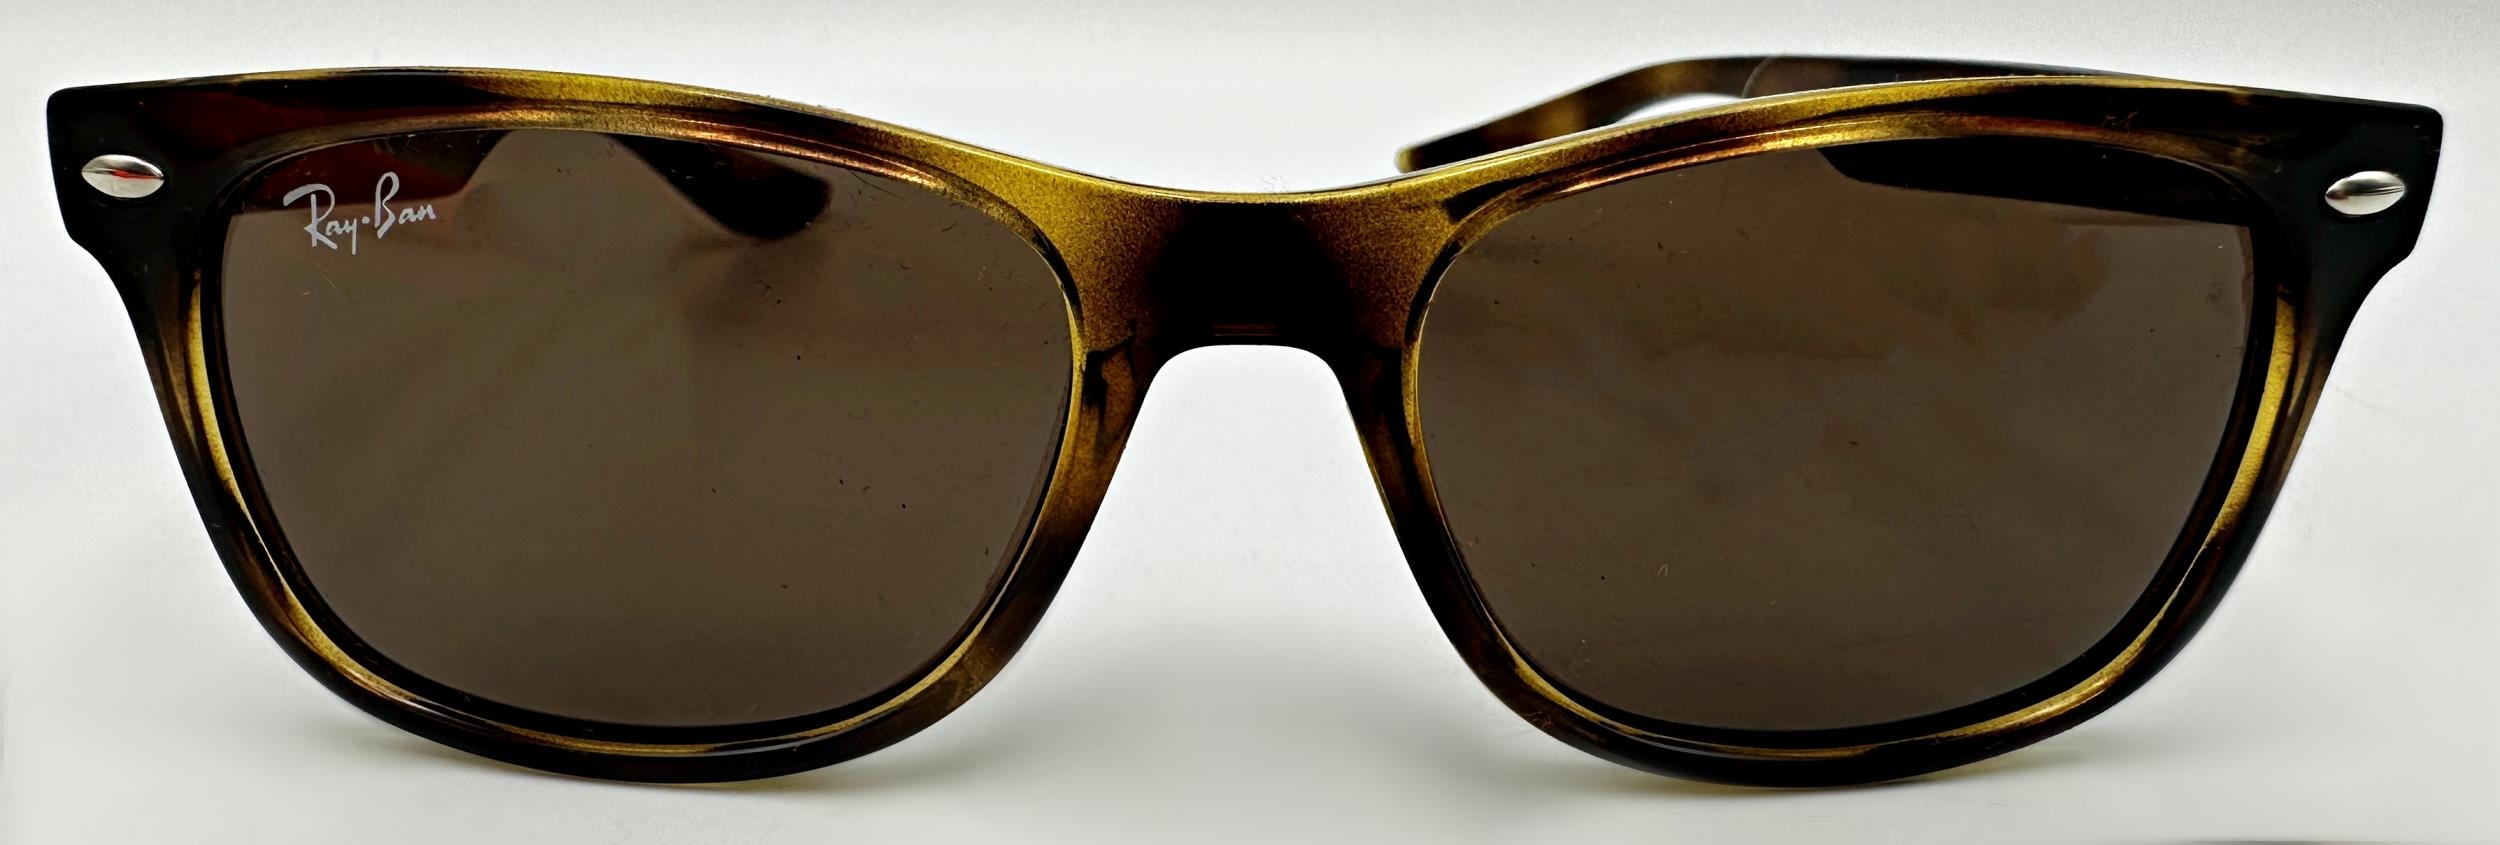 A pair of junior Ray-Ban tortoiseshell sunglasses for children in the iconic Wayfarer design,